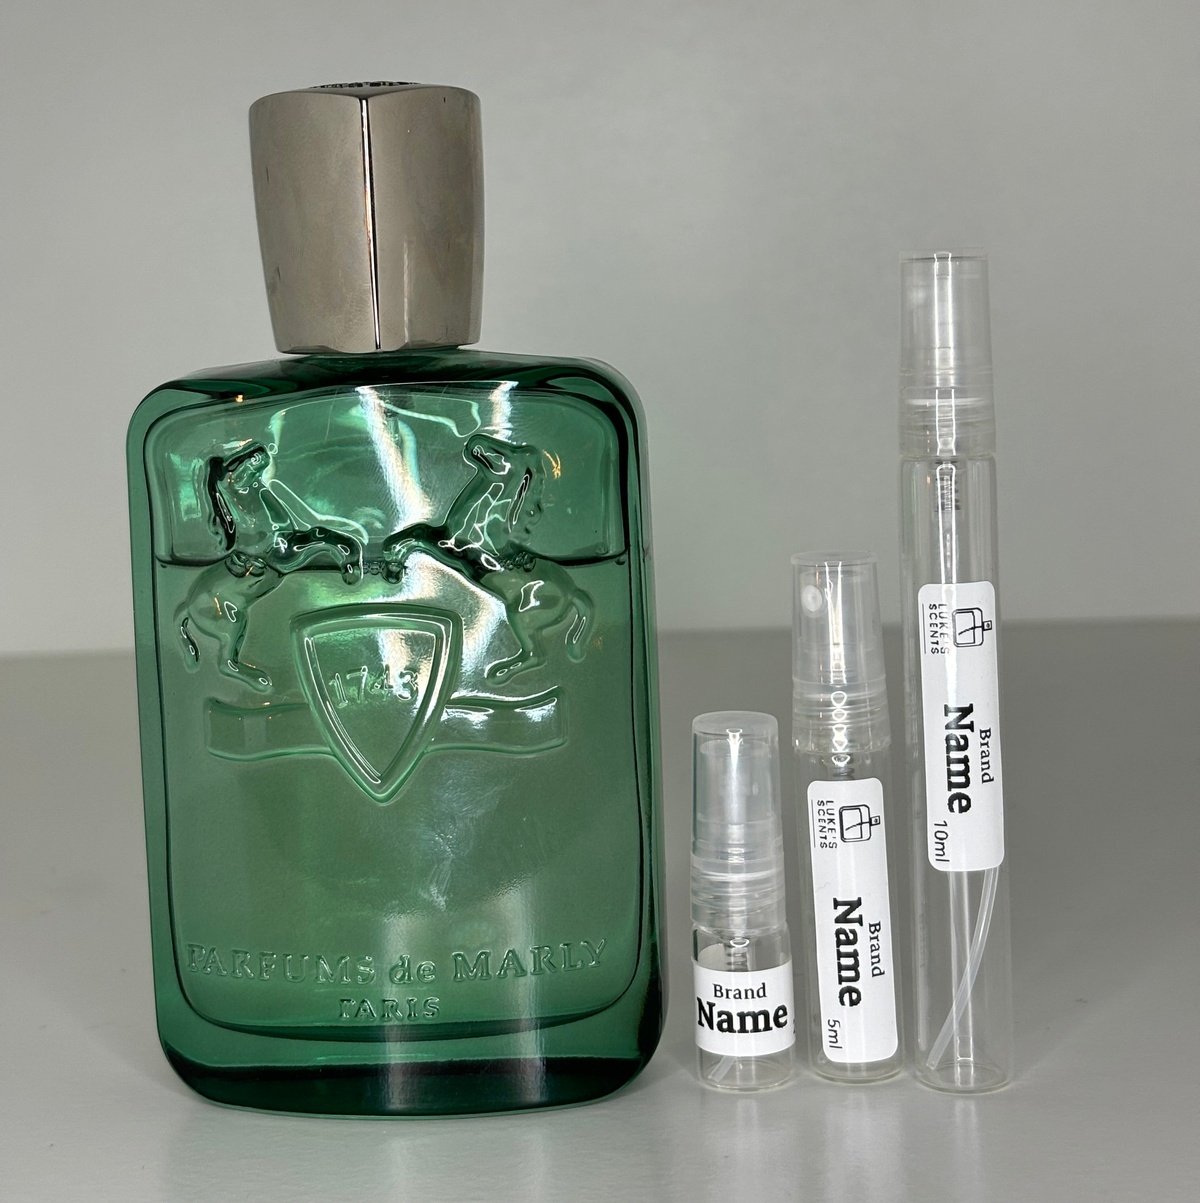 Parfums De Marley Greenly Sample